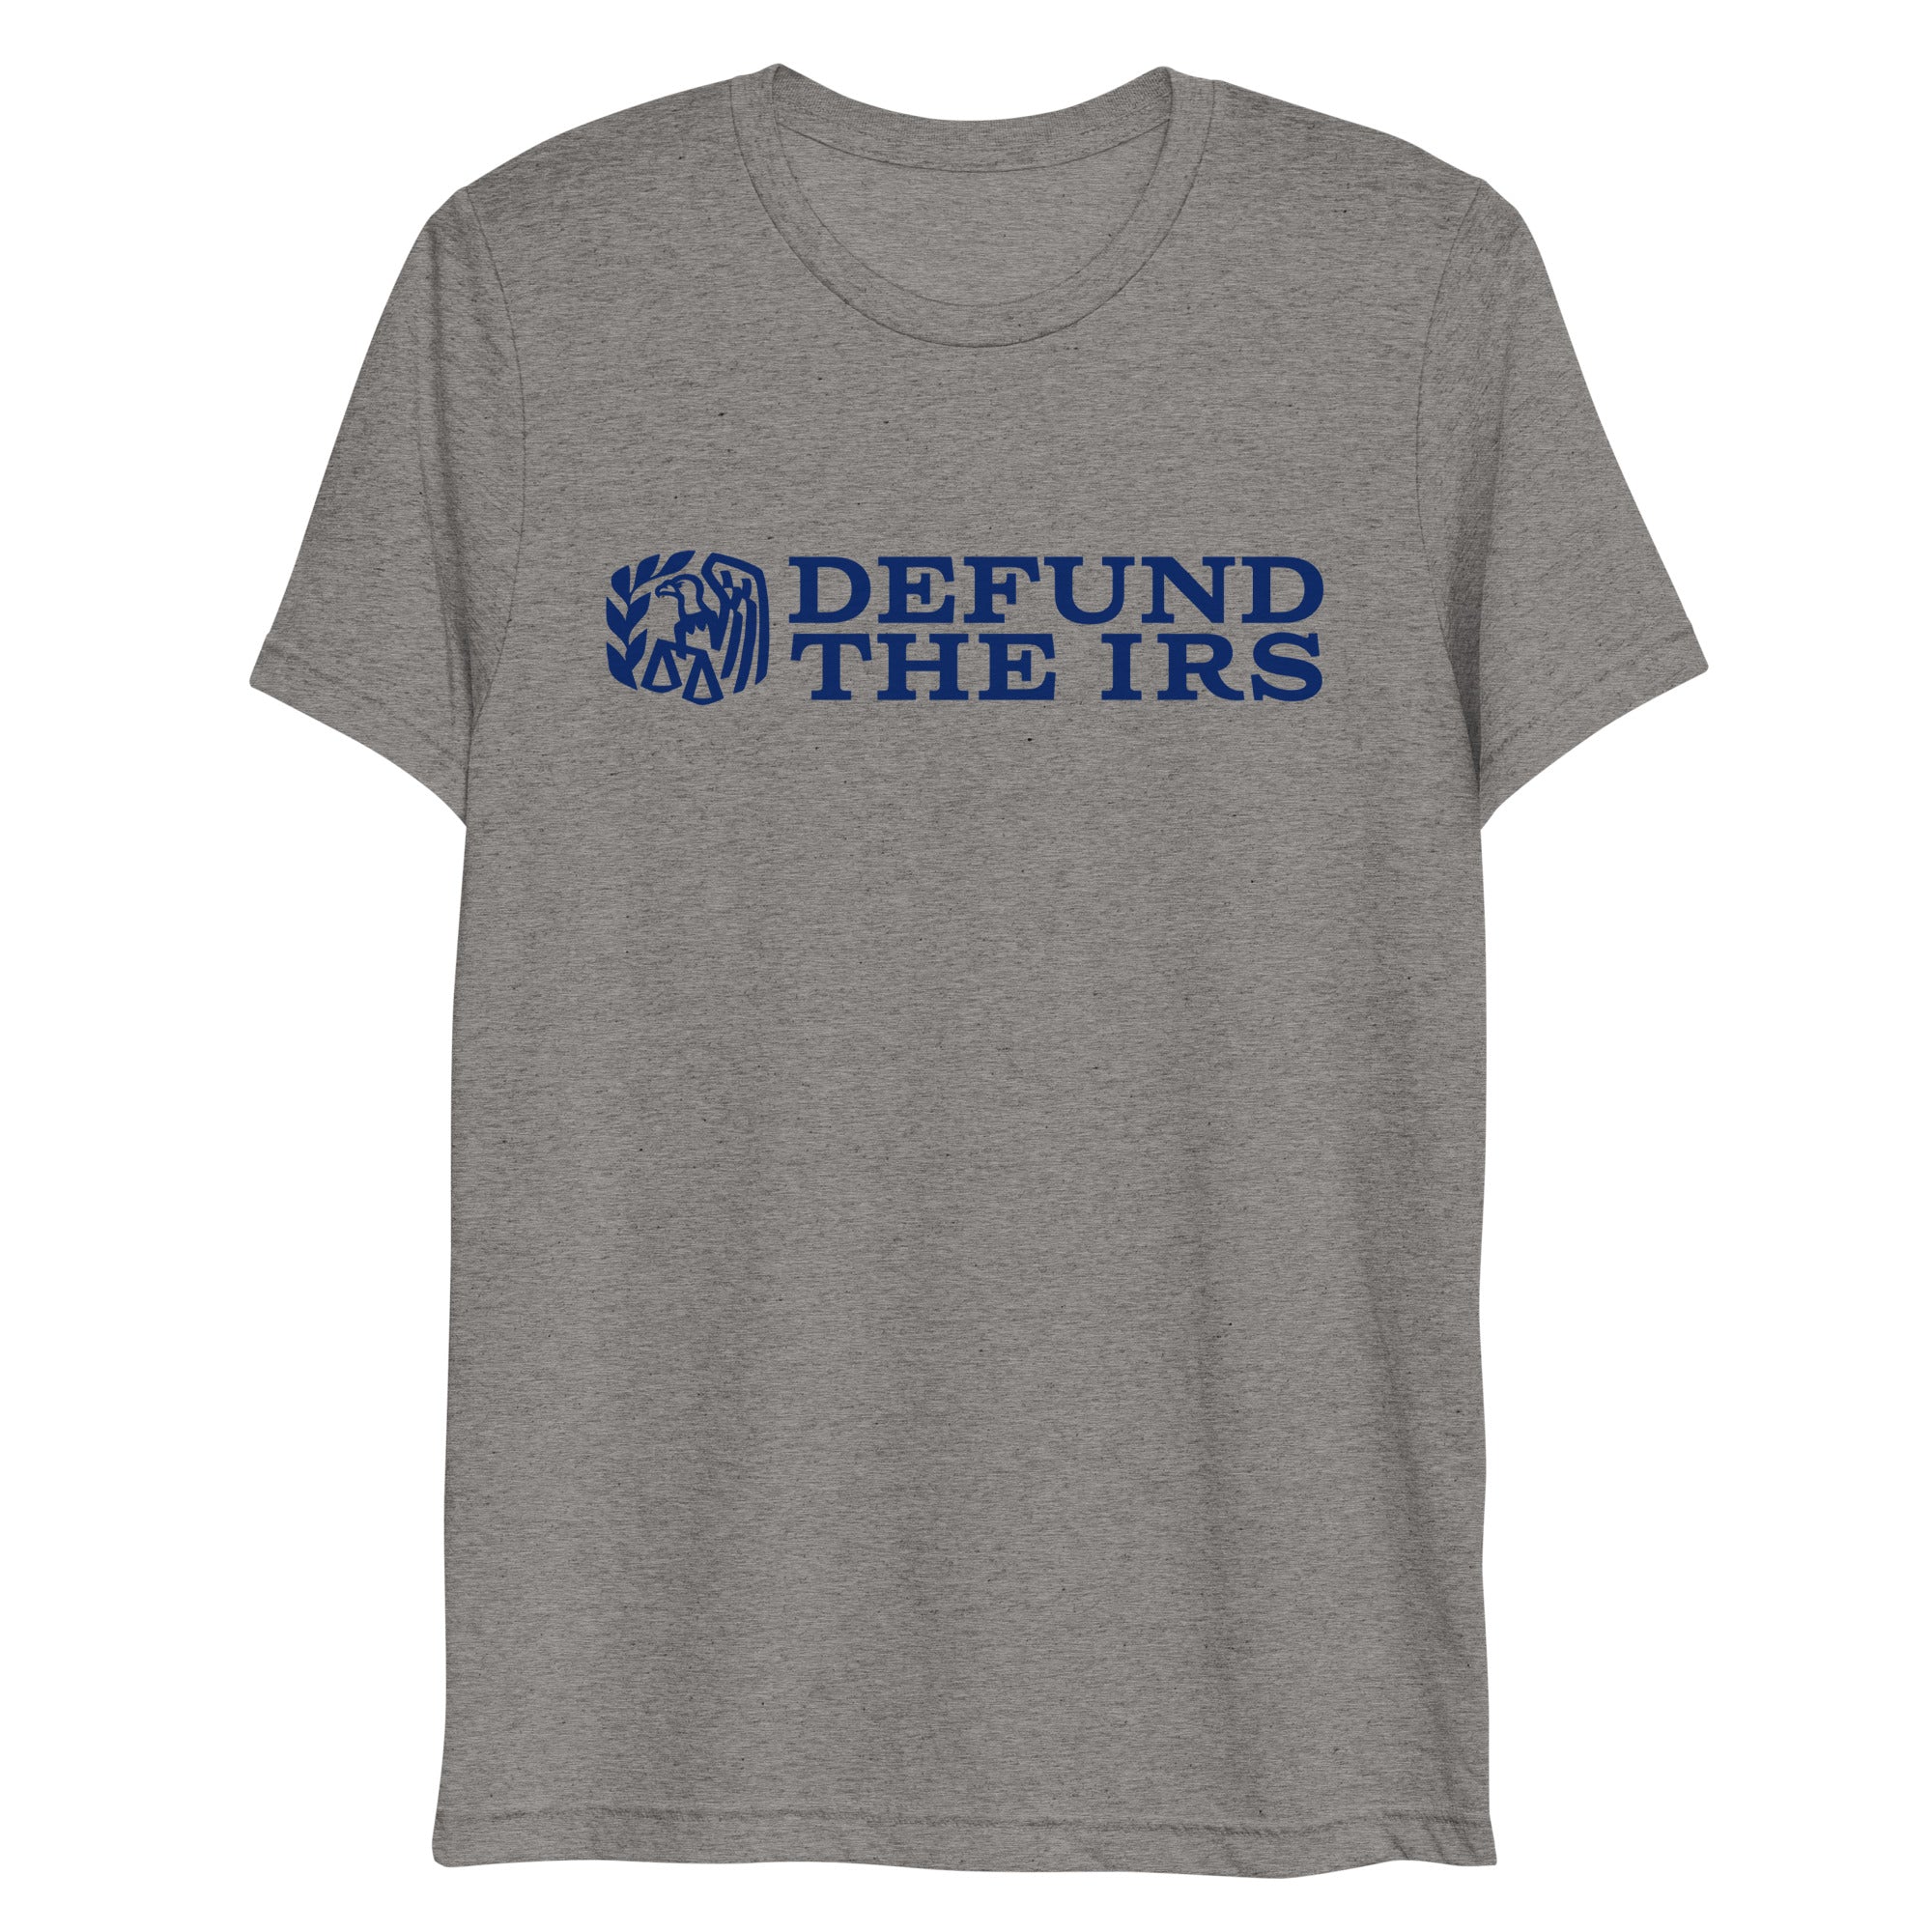 Defund the IRS Tri-Blend Track Shirt